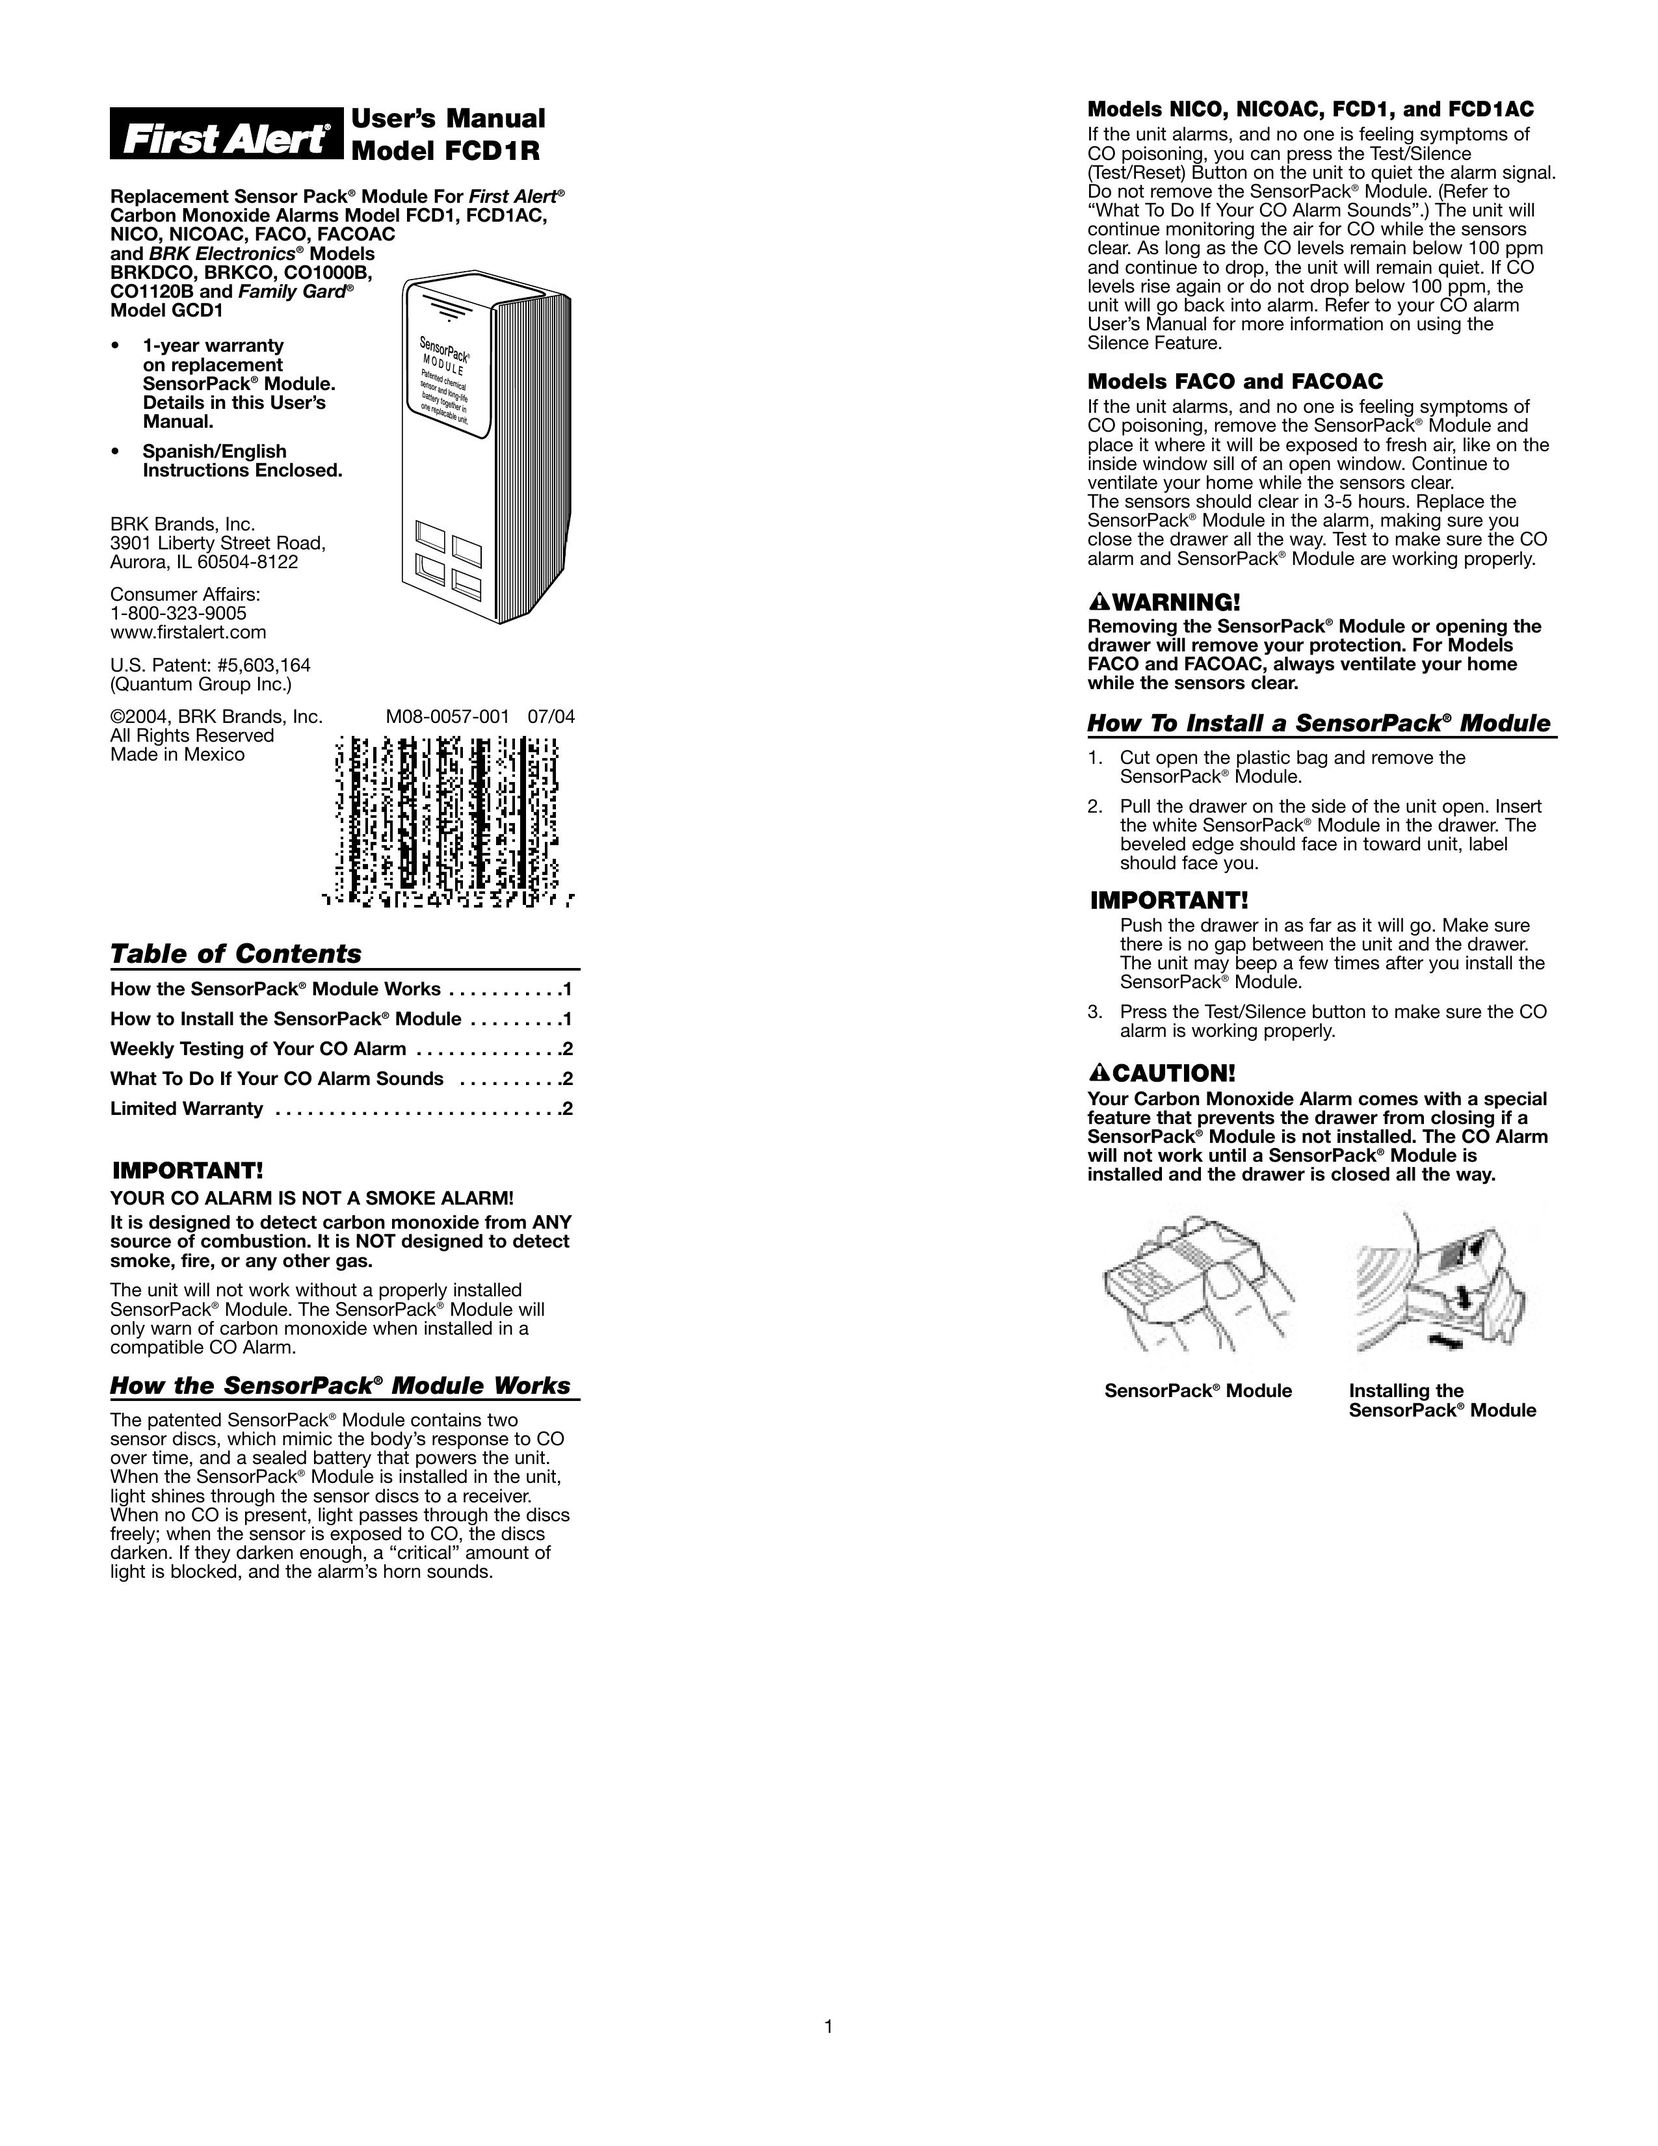 First Alert FCD1R Carbon Monoxide Alarm User Manual